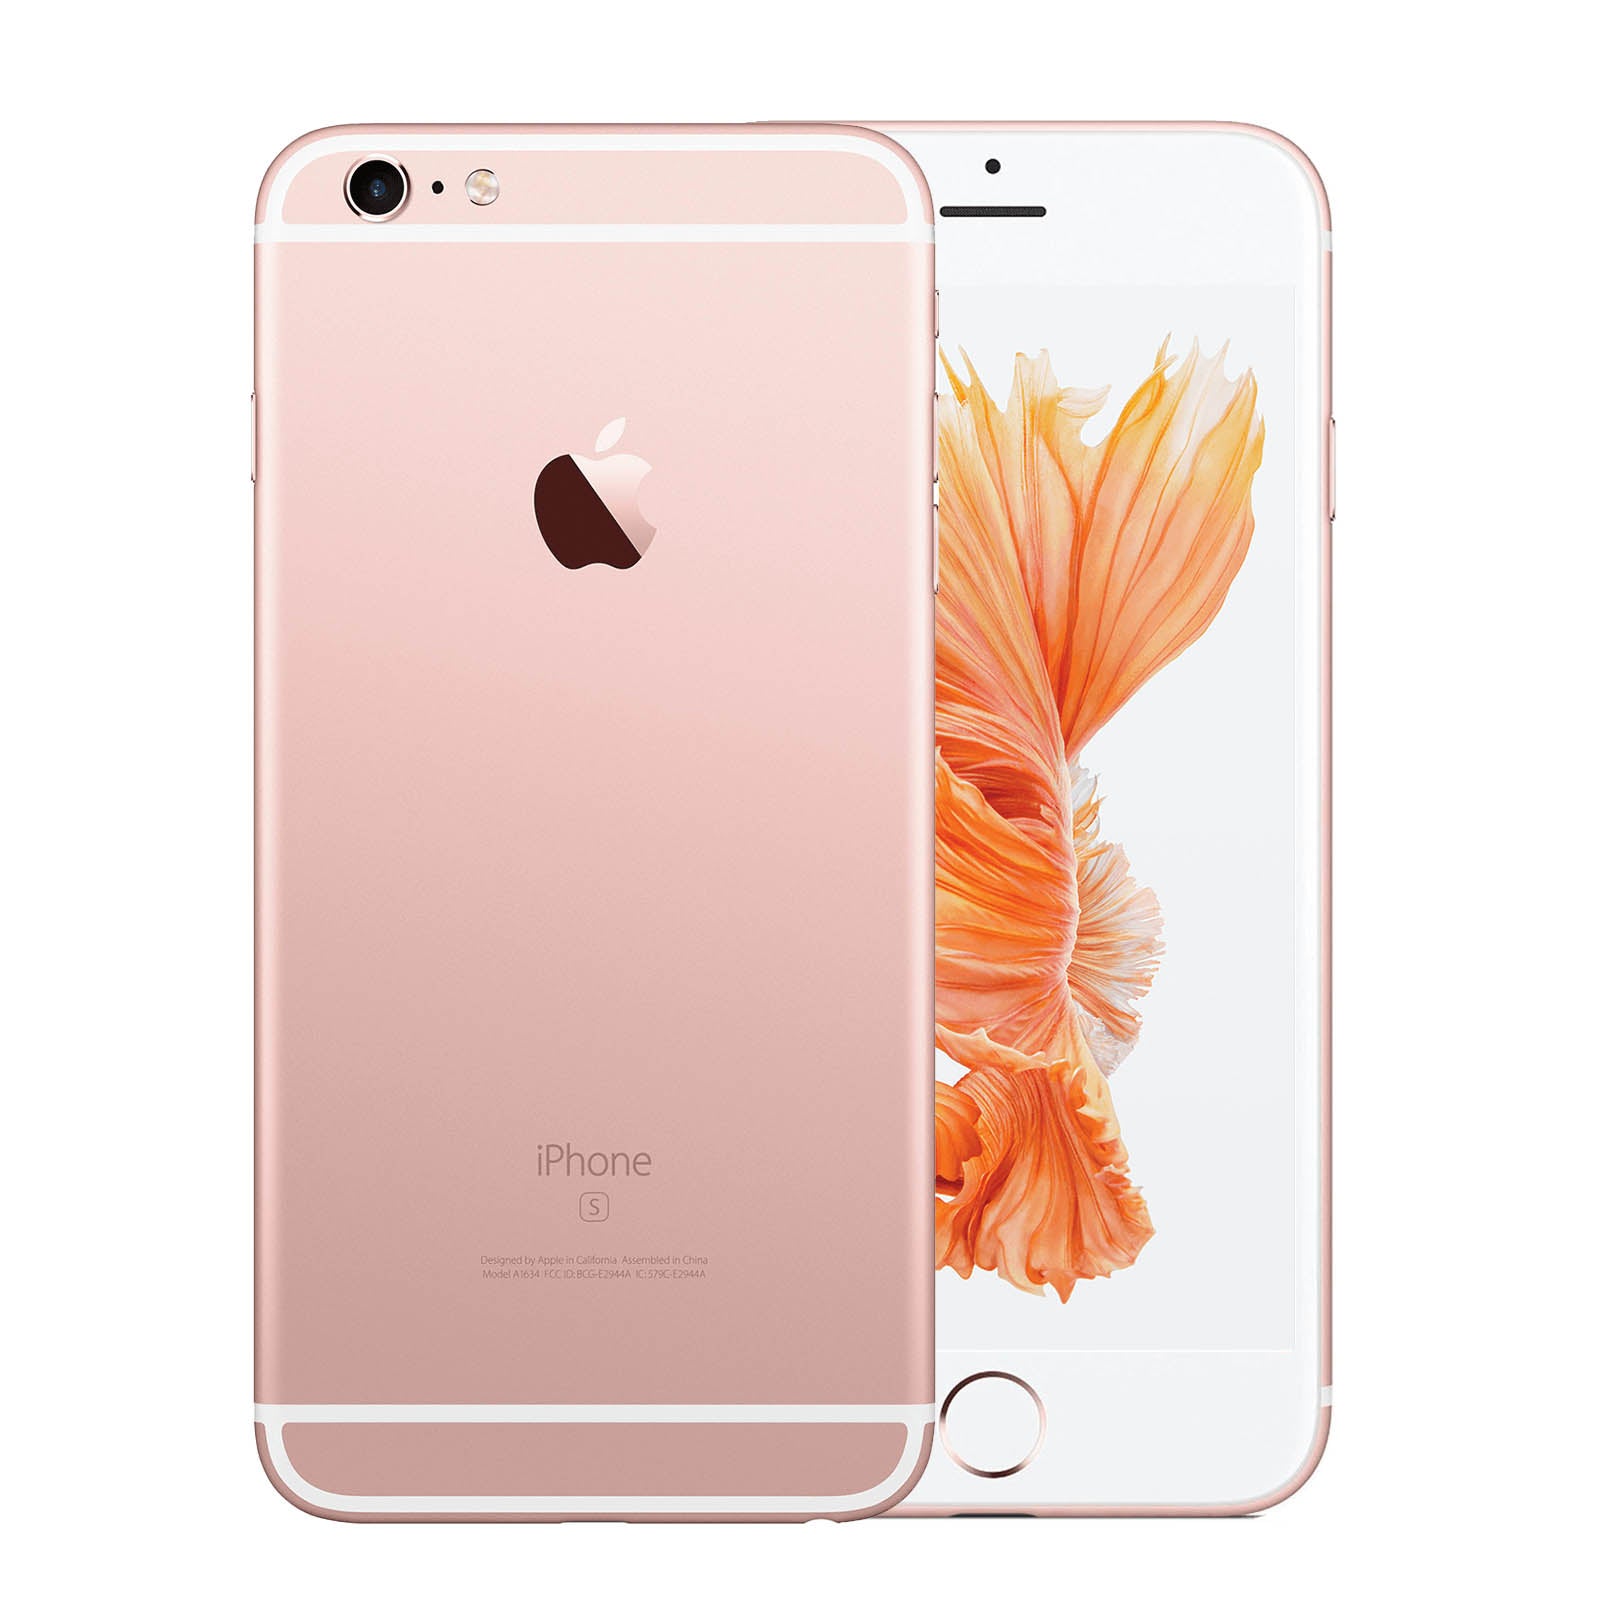 2021新商品 iPhone 6s Rose Gold 16 GB au